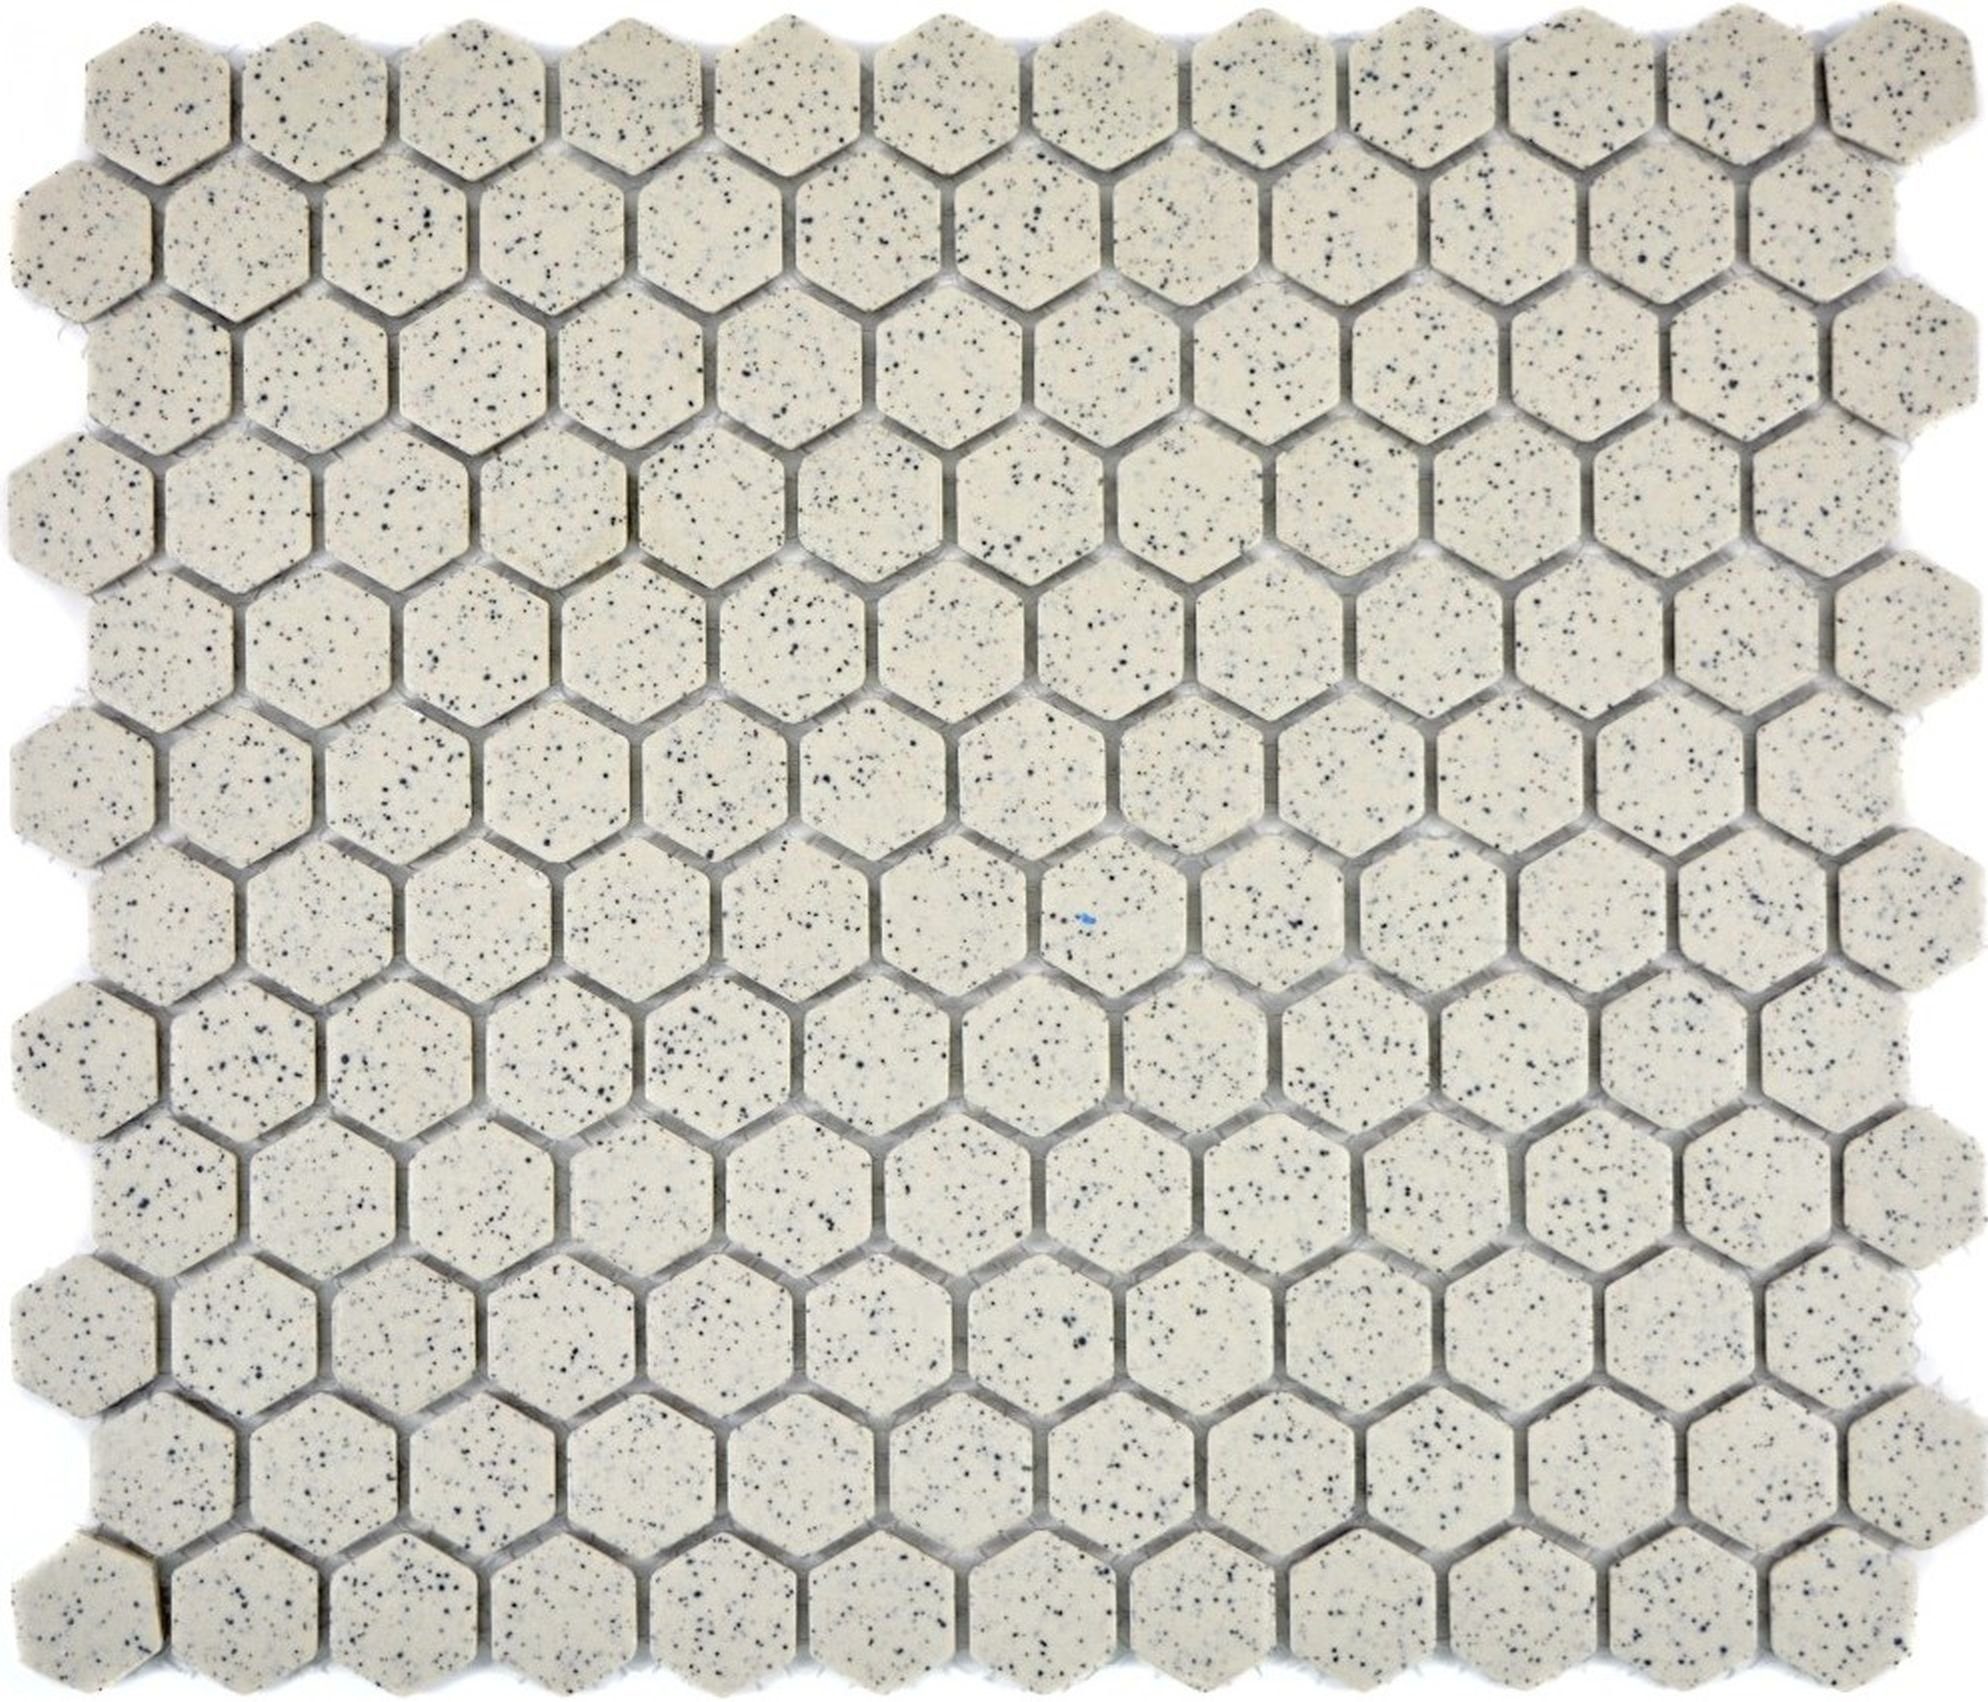 Mosani Bodenfliese Mosaik Fliese Keramik cremeweiß mini Hexagaon unglasiert rutschsicher